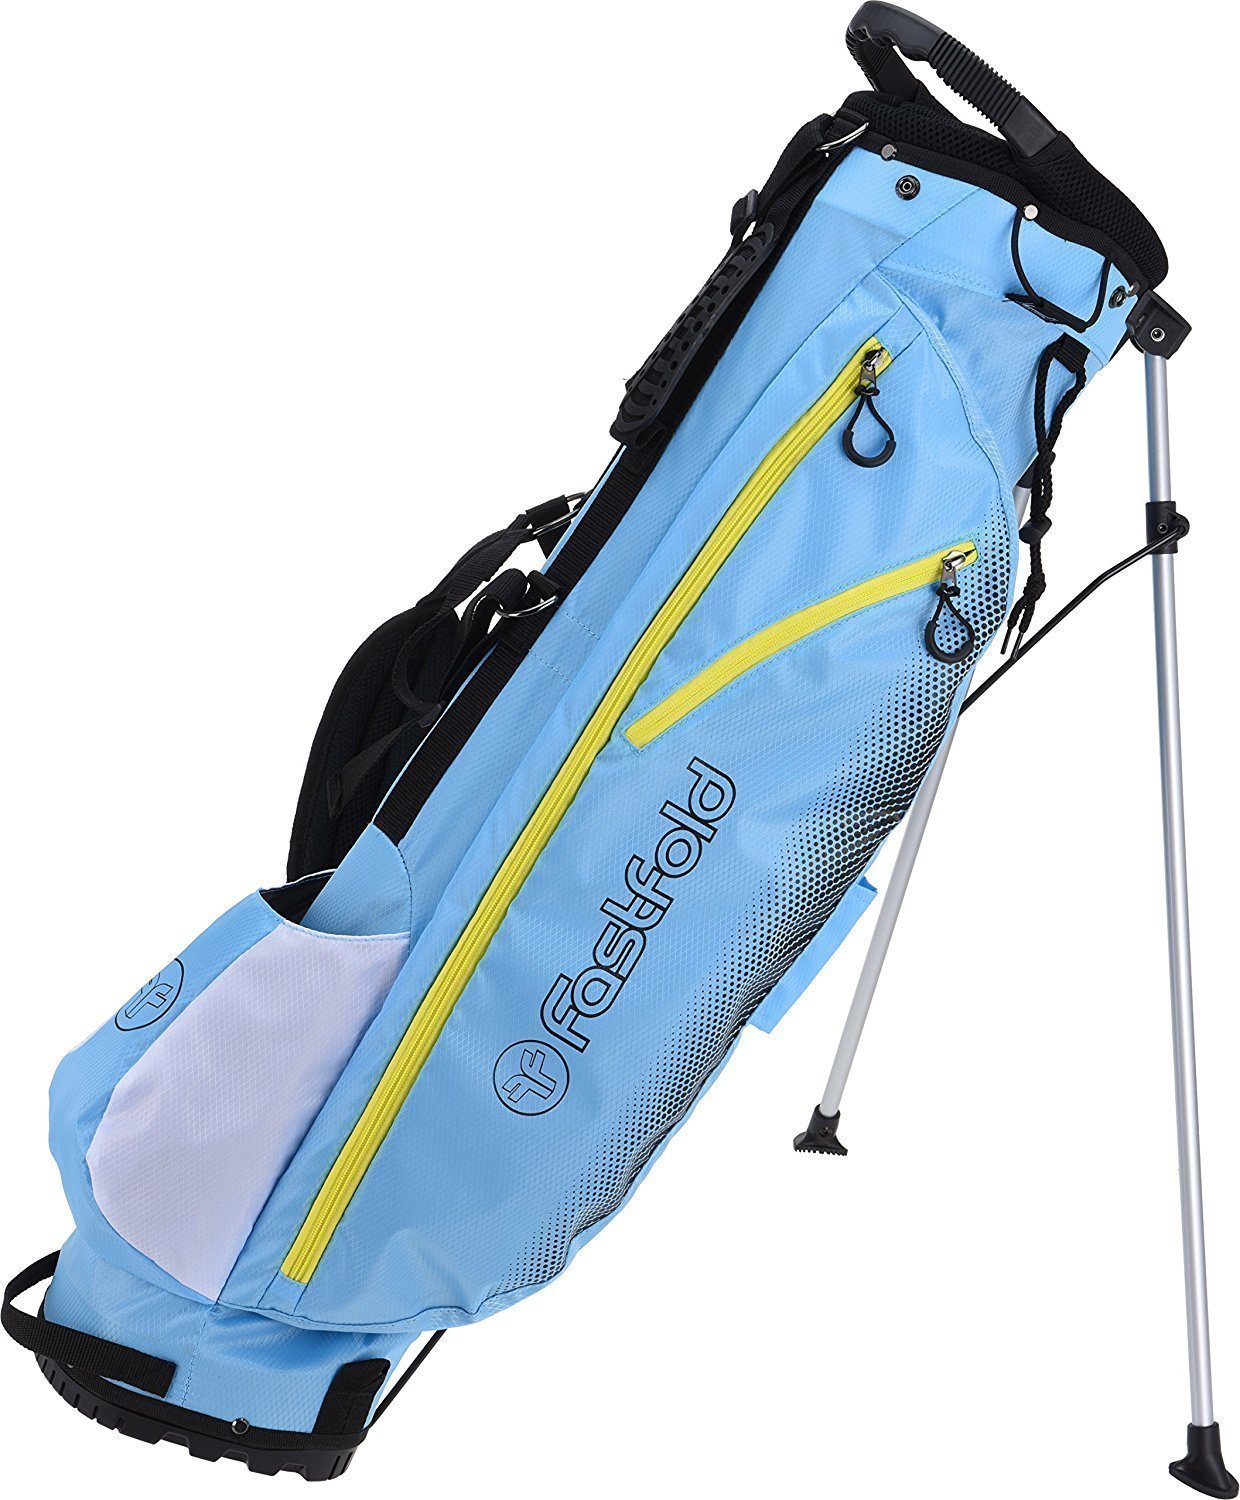 Golftaske Fastfold UL 7.0 Aqua/Neon/White Stand Bag